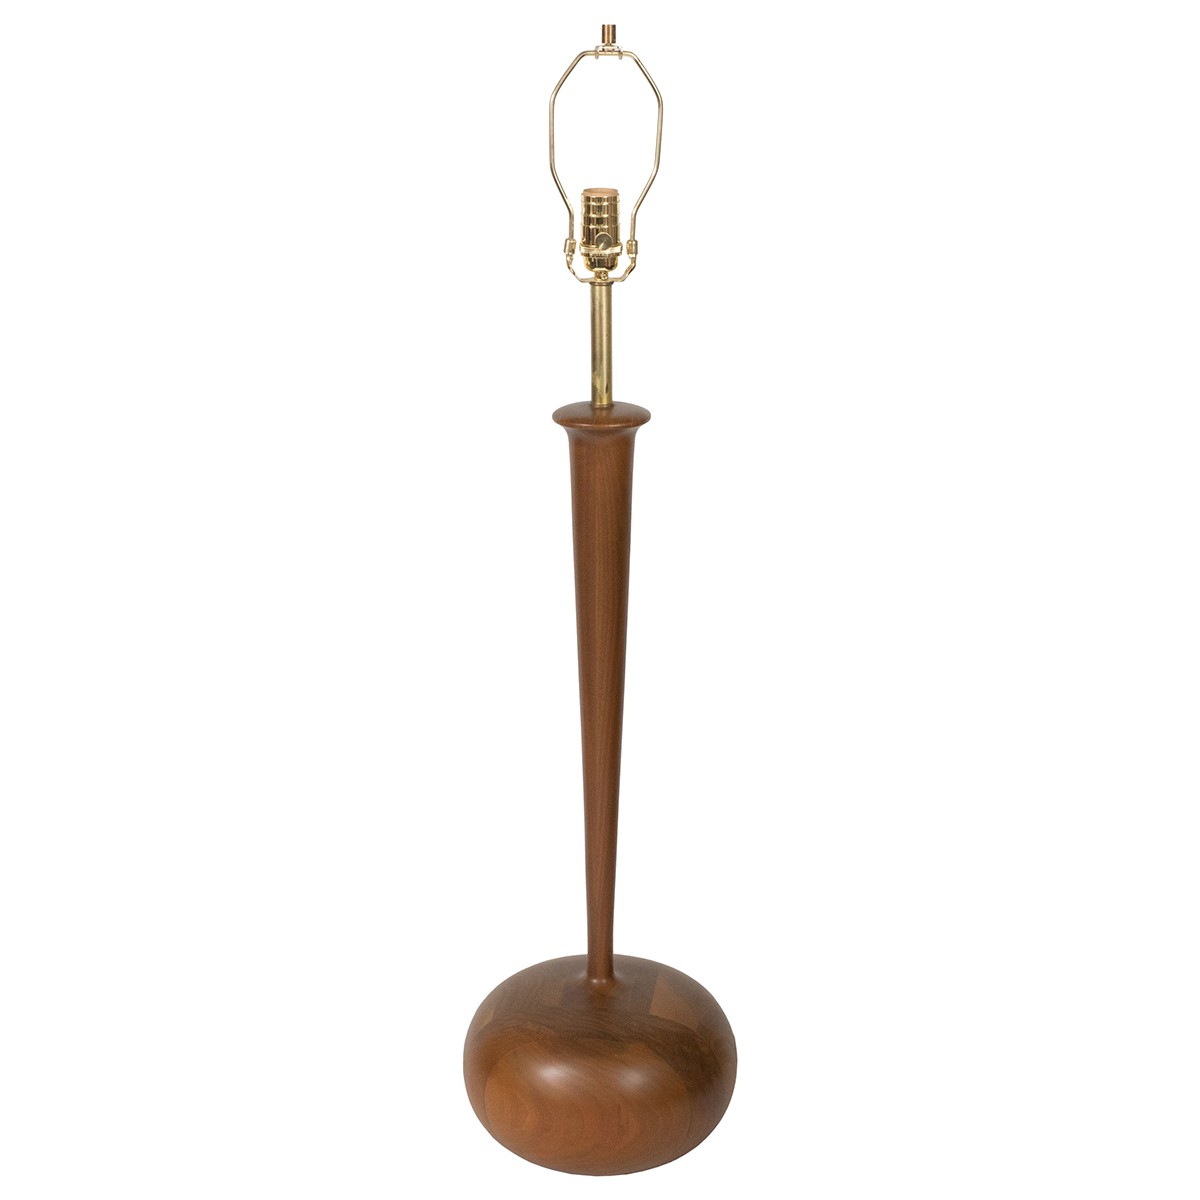 Single bulb-shaped walnut wood table lamp